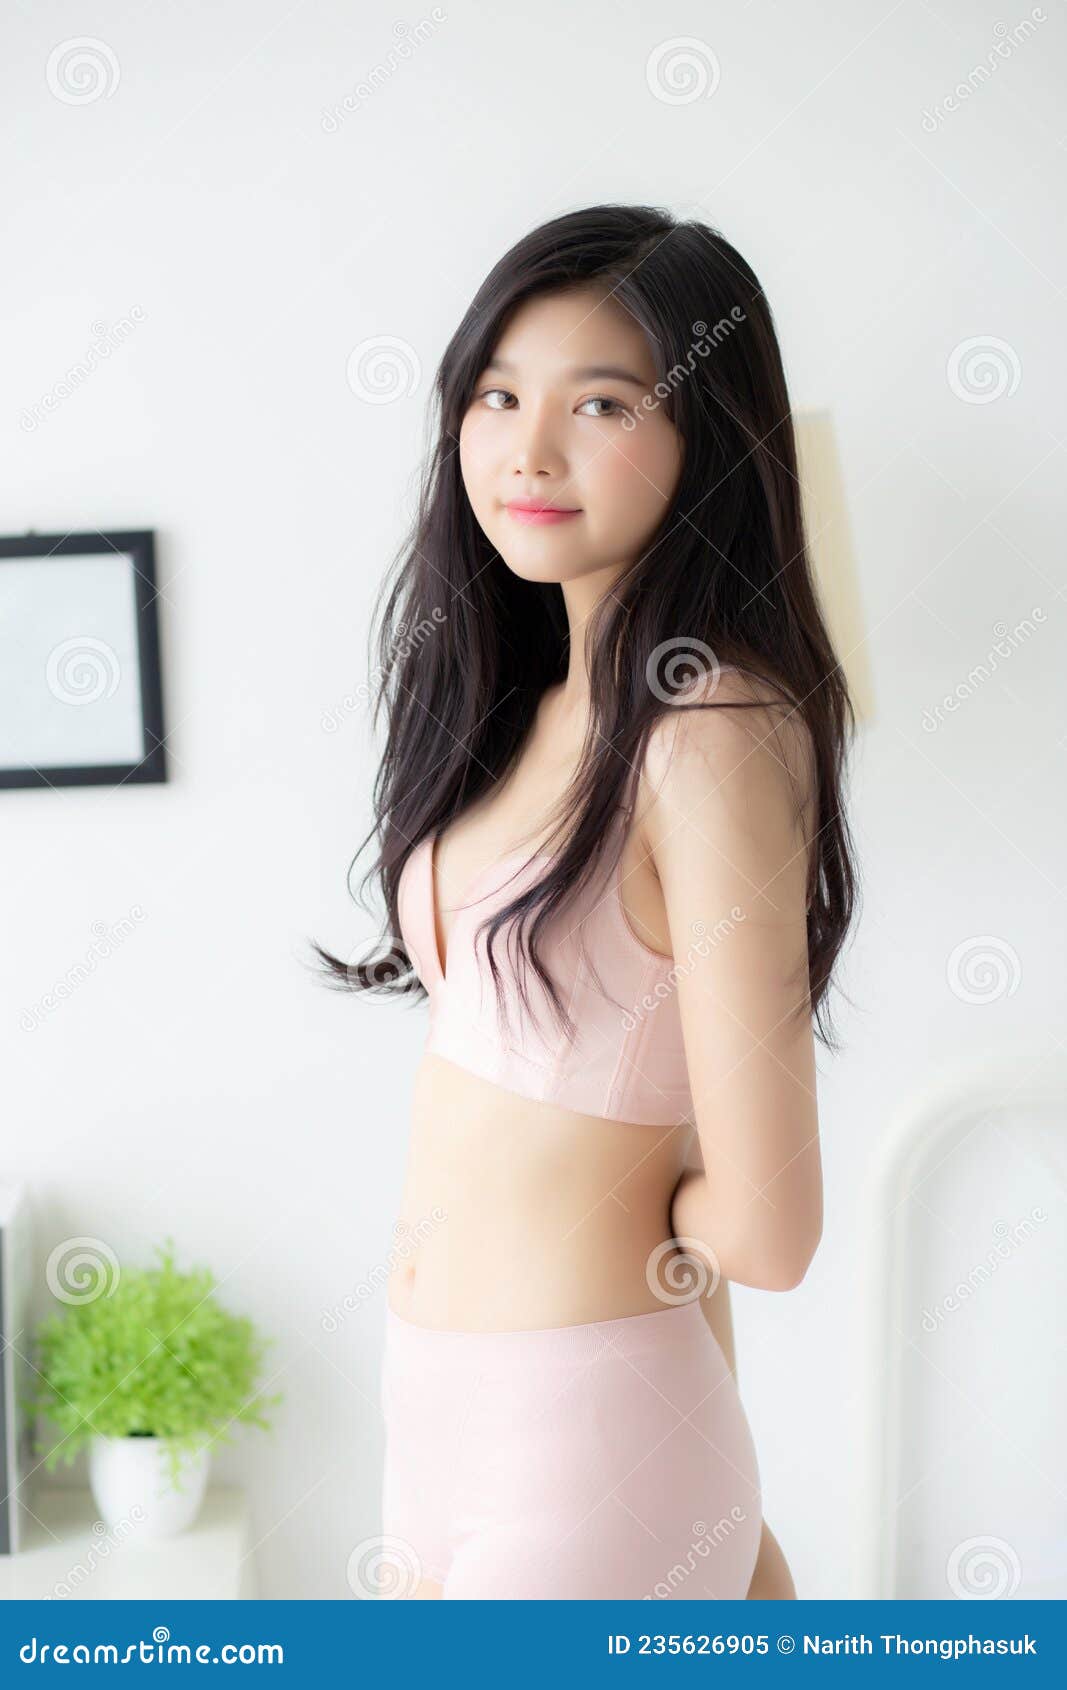 alina norsavanh share young asian girls in panties photos